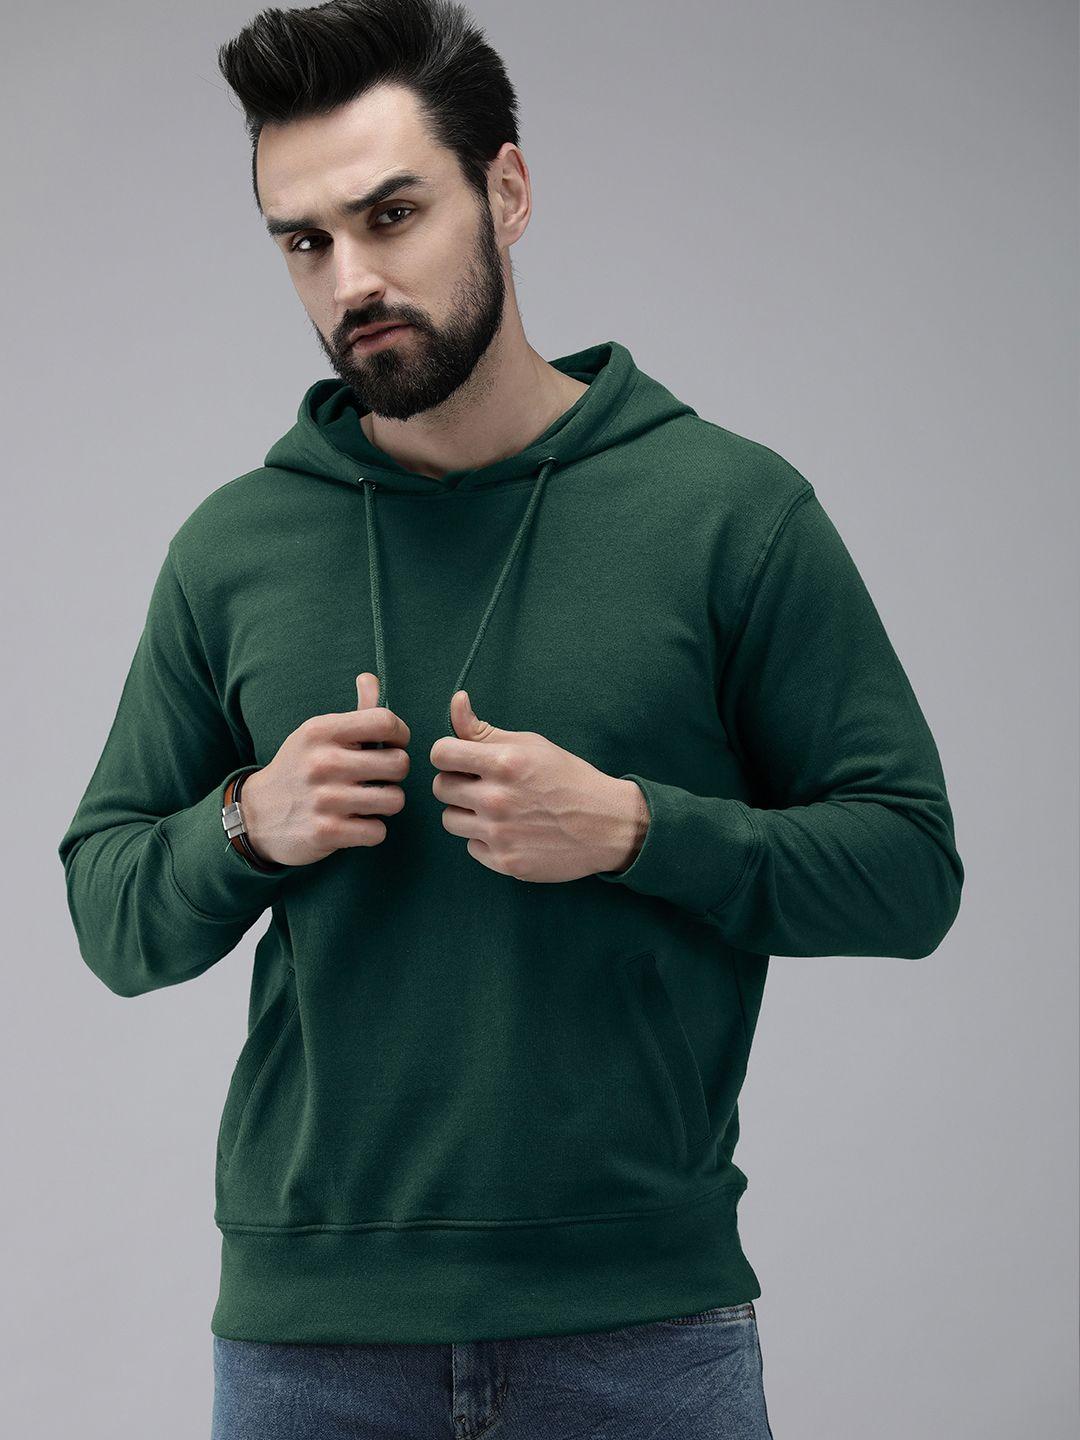 roadster-men-teal-green-solid-hooded-sweatshirt